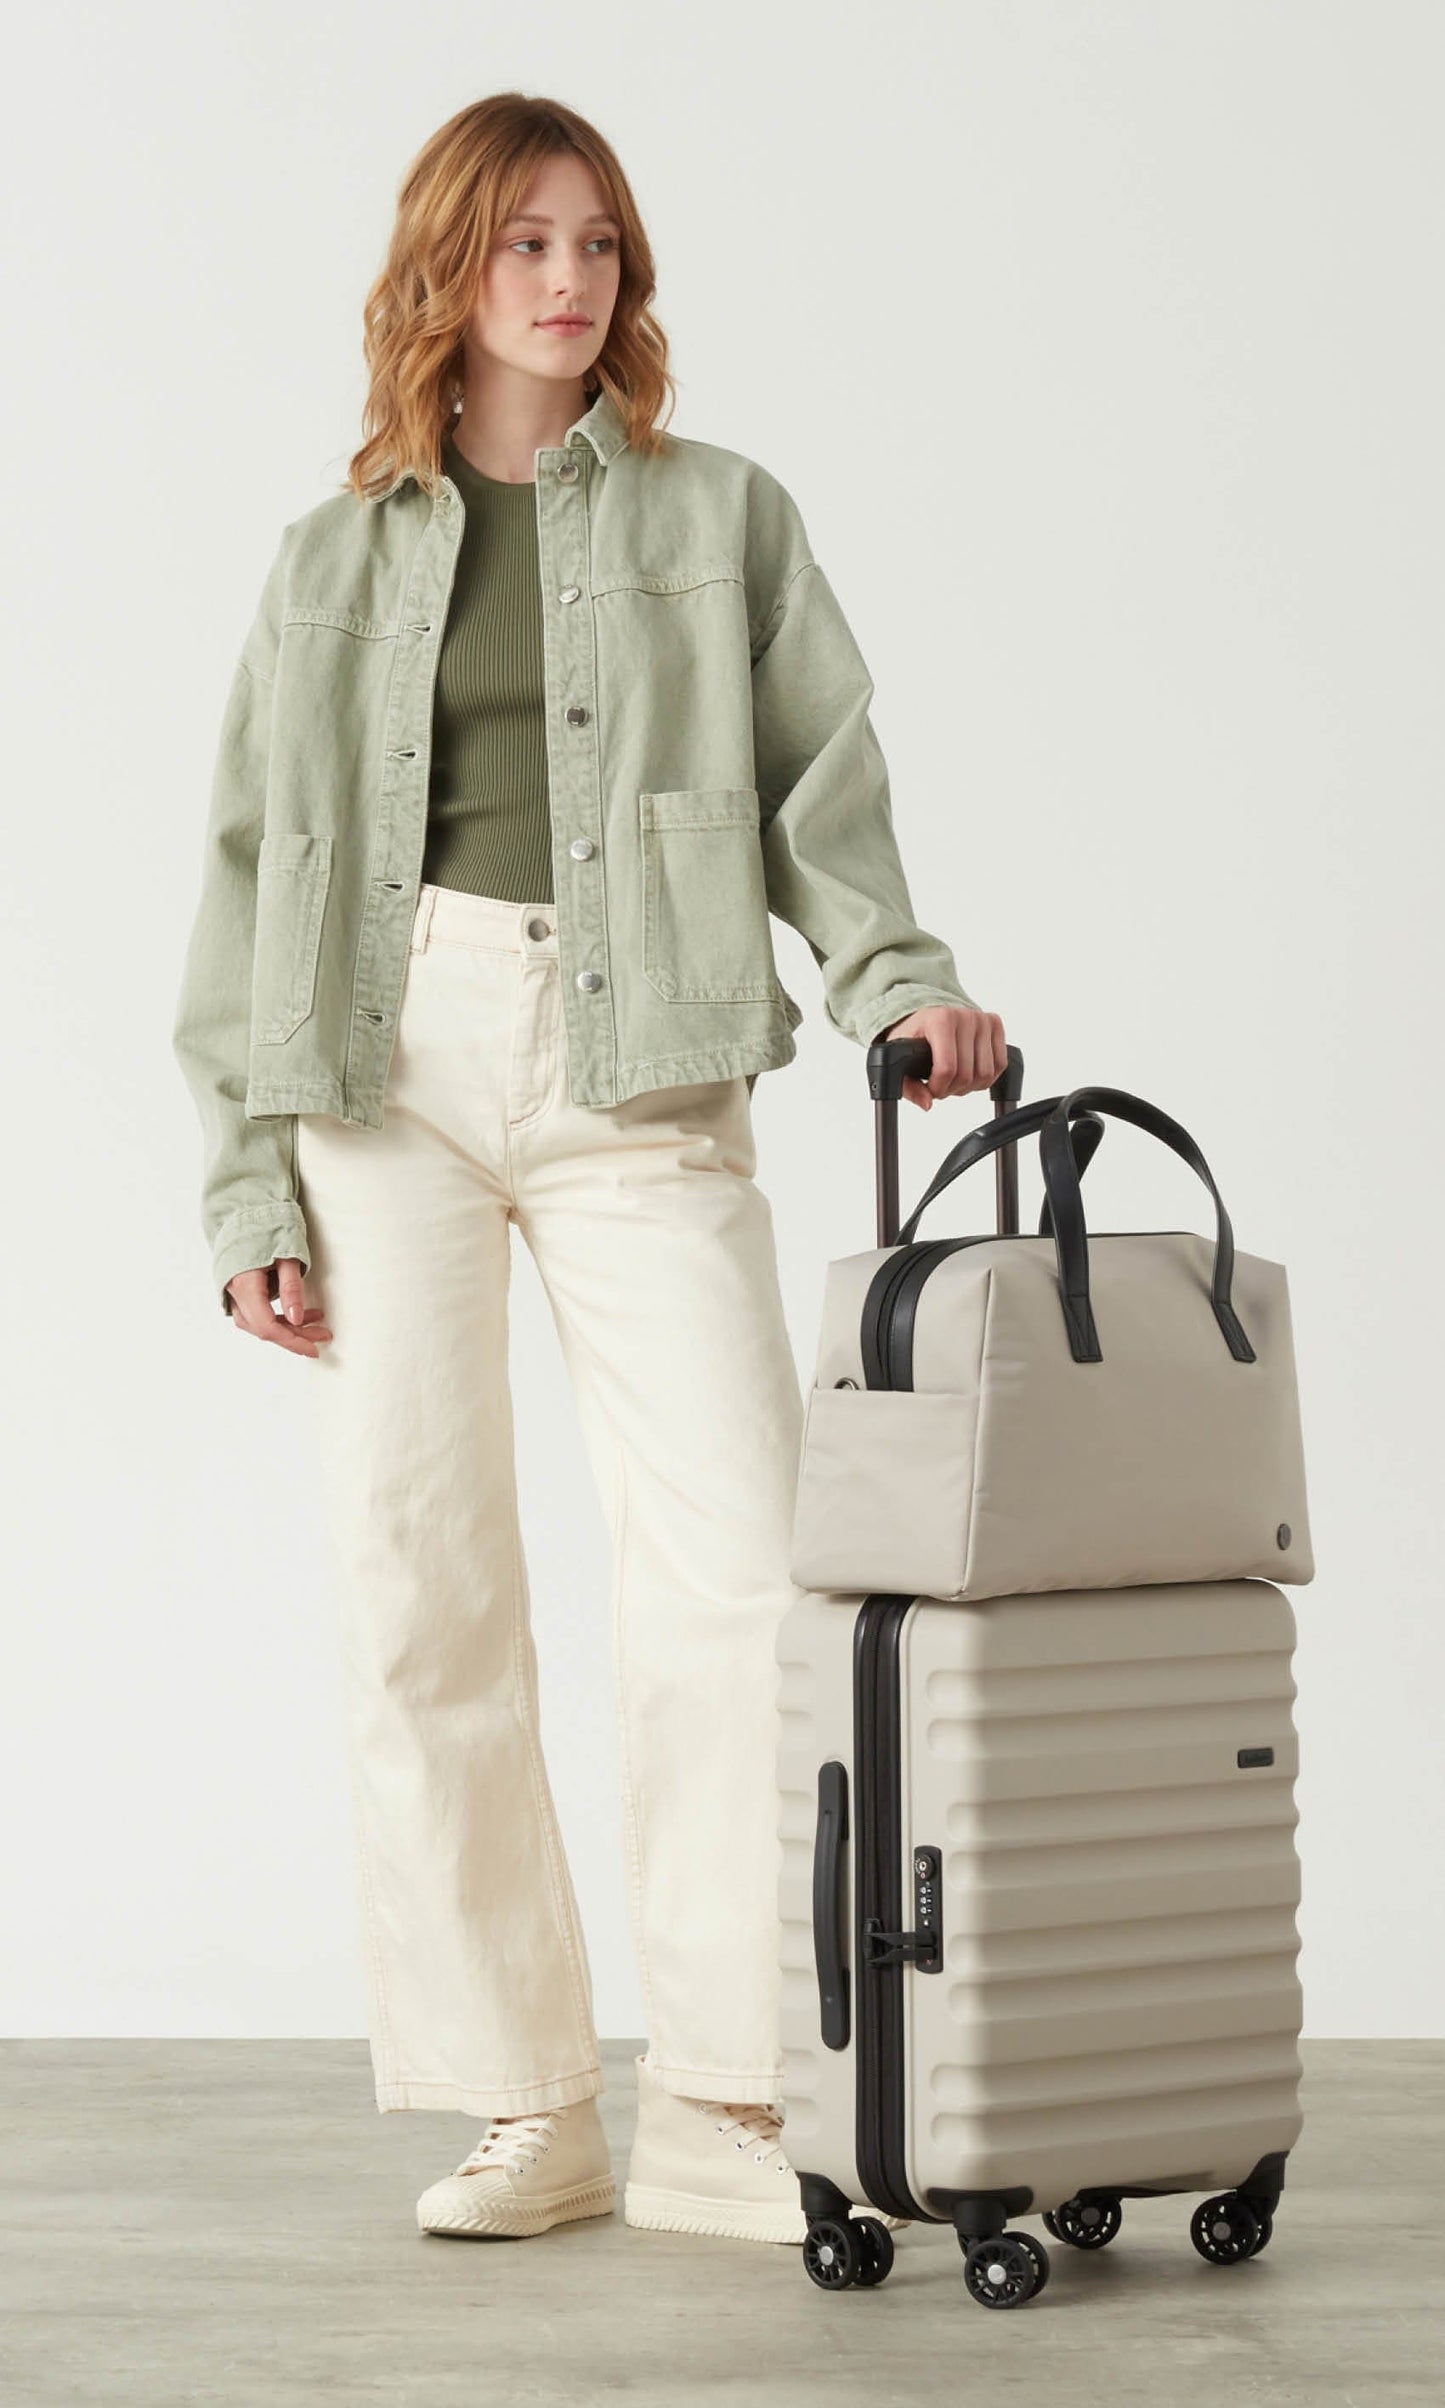 Antler Luggage -  Chelsea overnight bag in mineral - Overnight Bags Chelsea Overnight Bag Mineral (Blue) | Lifestyle Bags | Antler UK